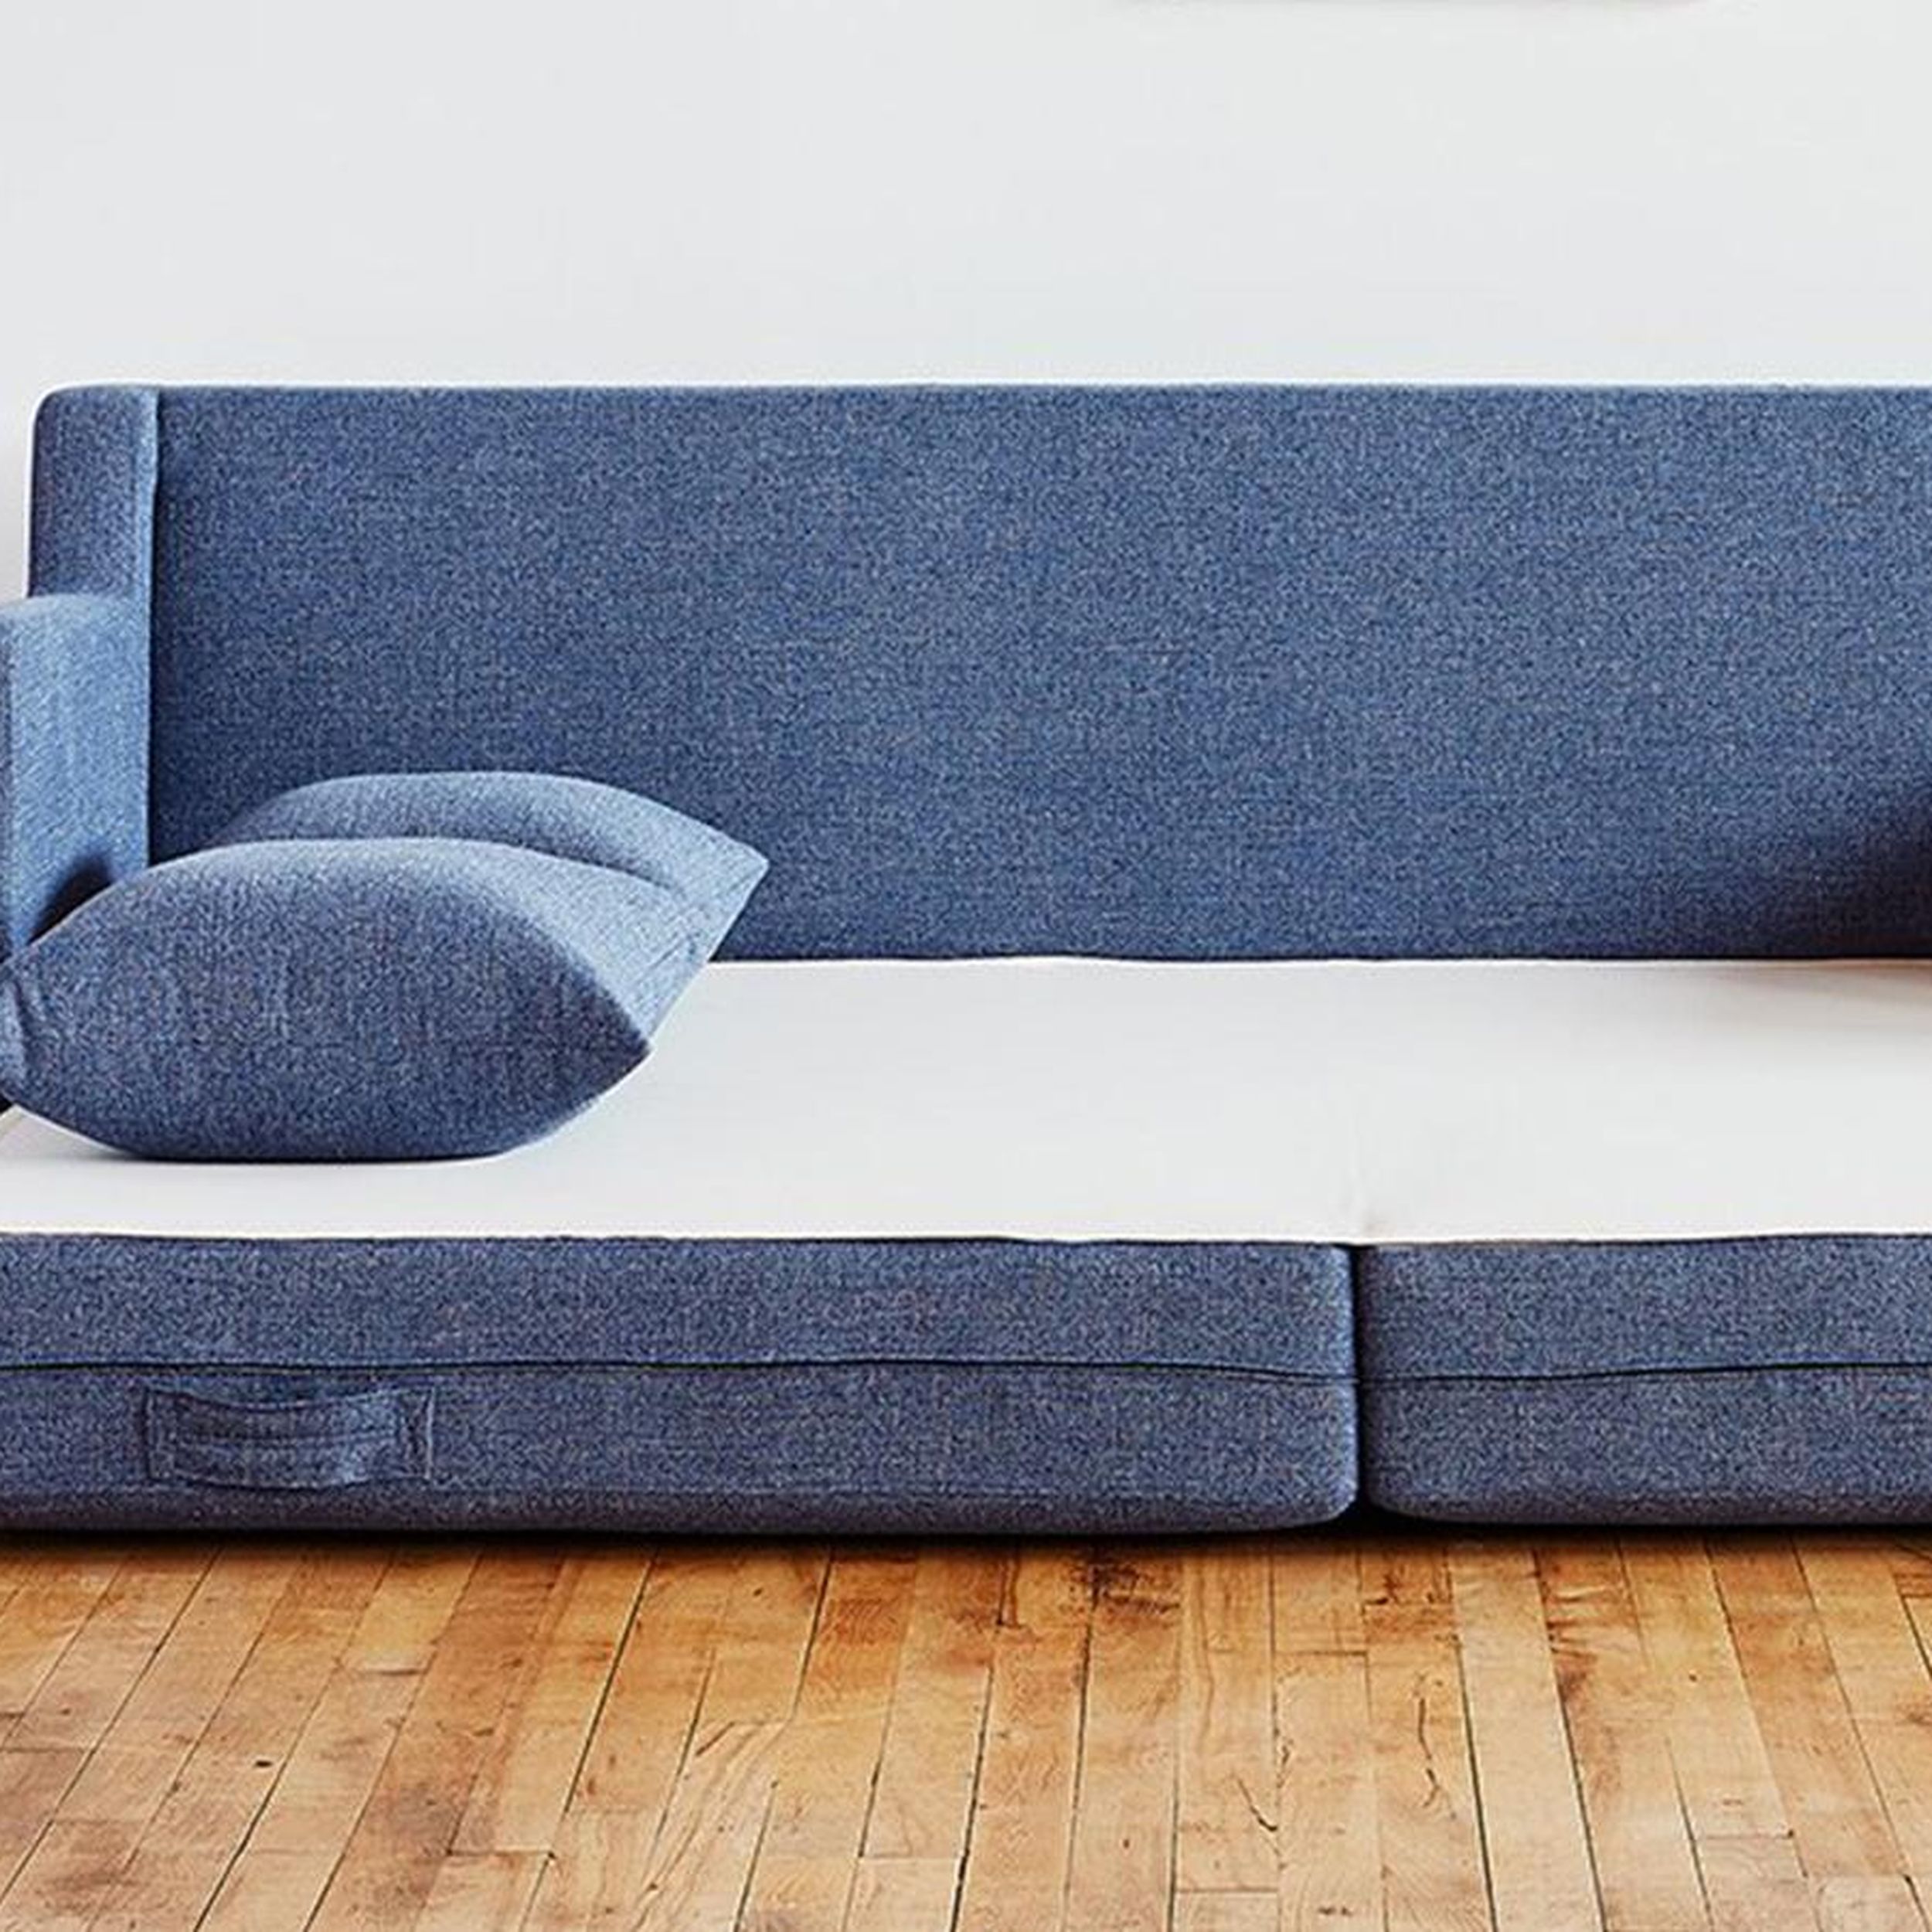 The Latest Sleeper Sofas Offer, Blu Dot Sleeper Sofa Review